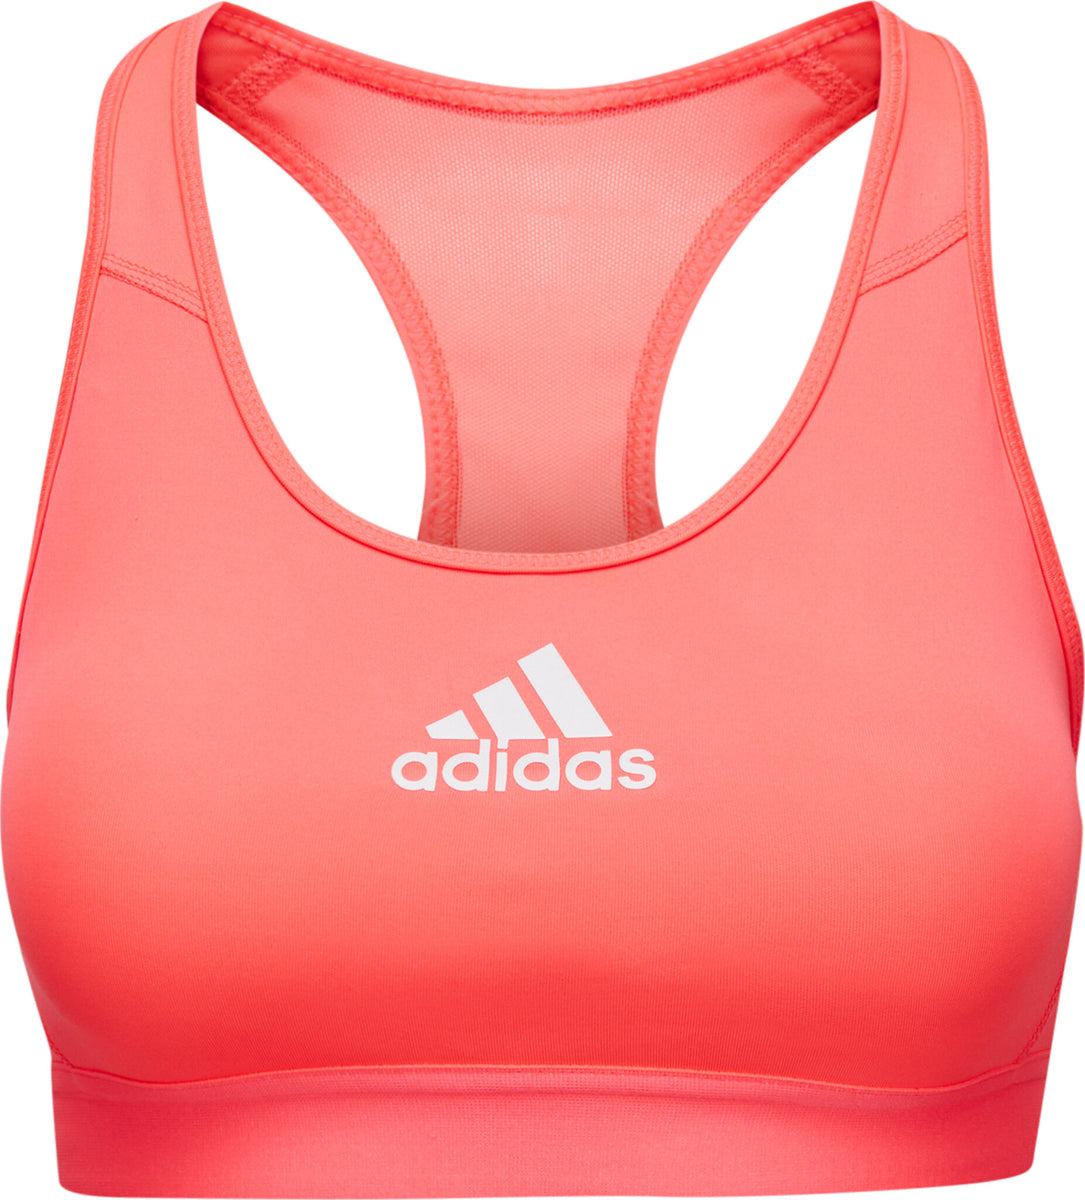 Adidas Don't Rest Alphaskin Padded Workout Bra (Past Season) - Women's